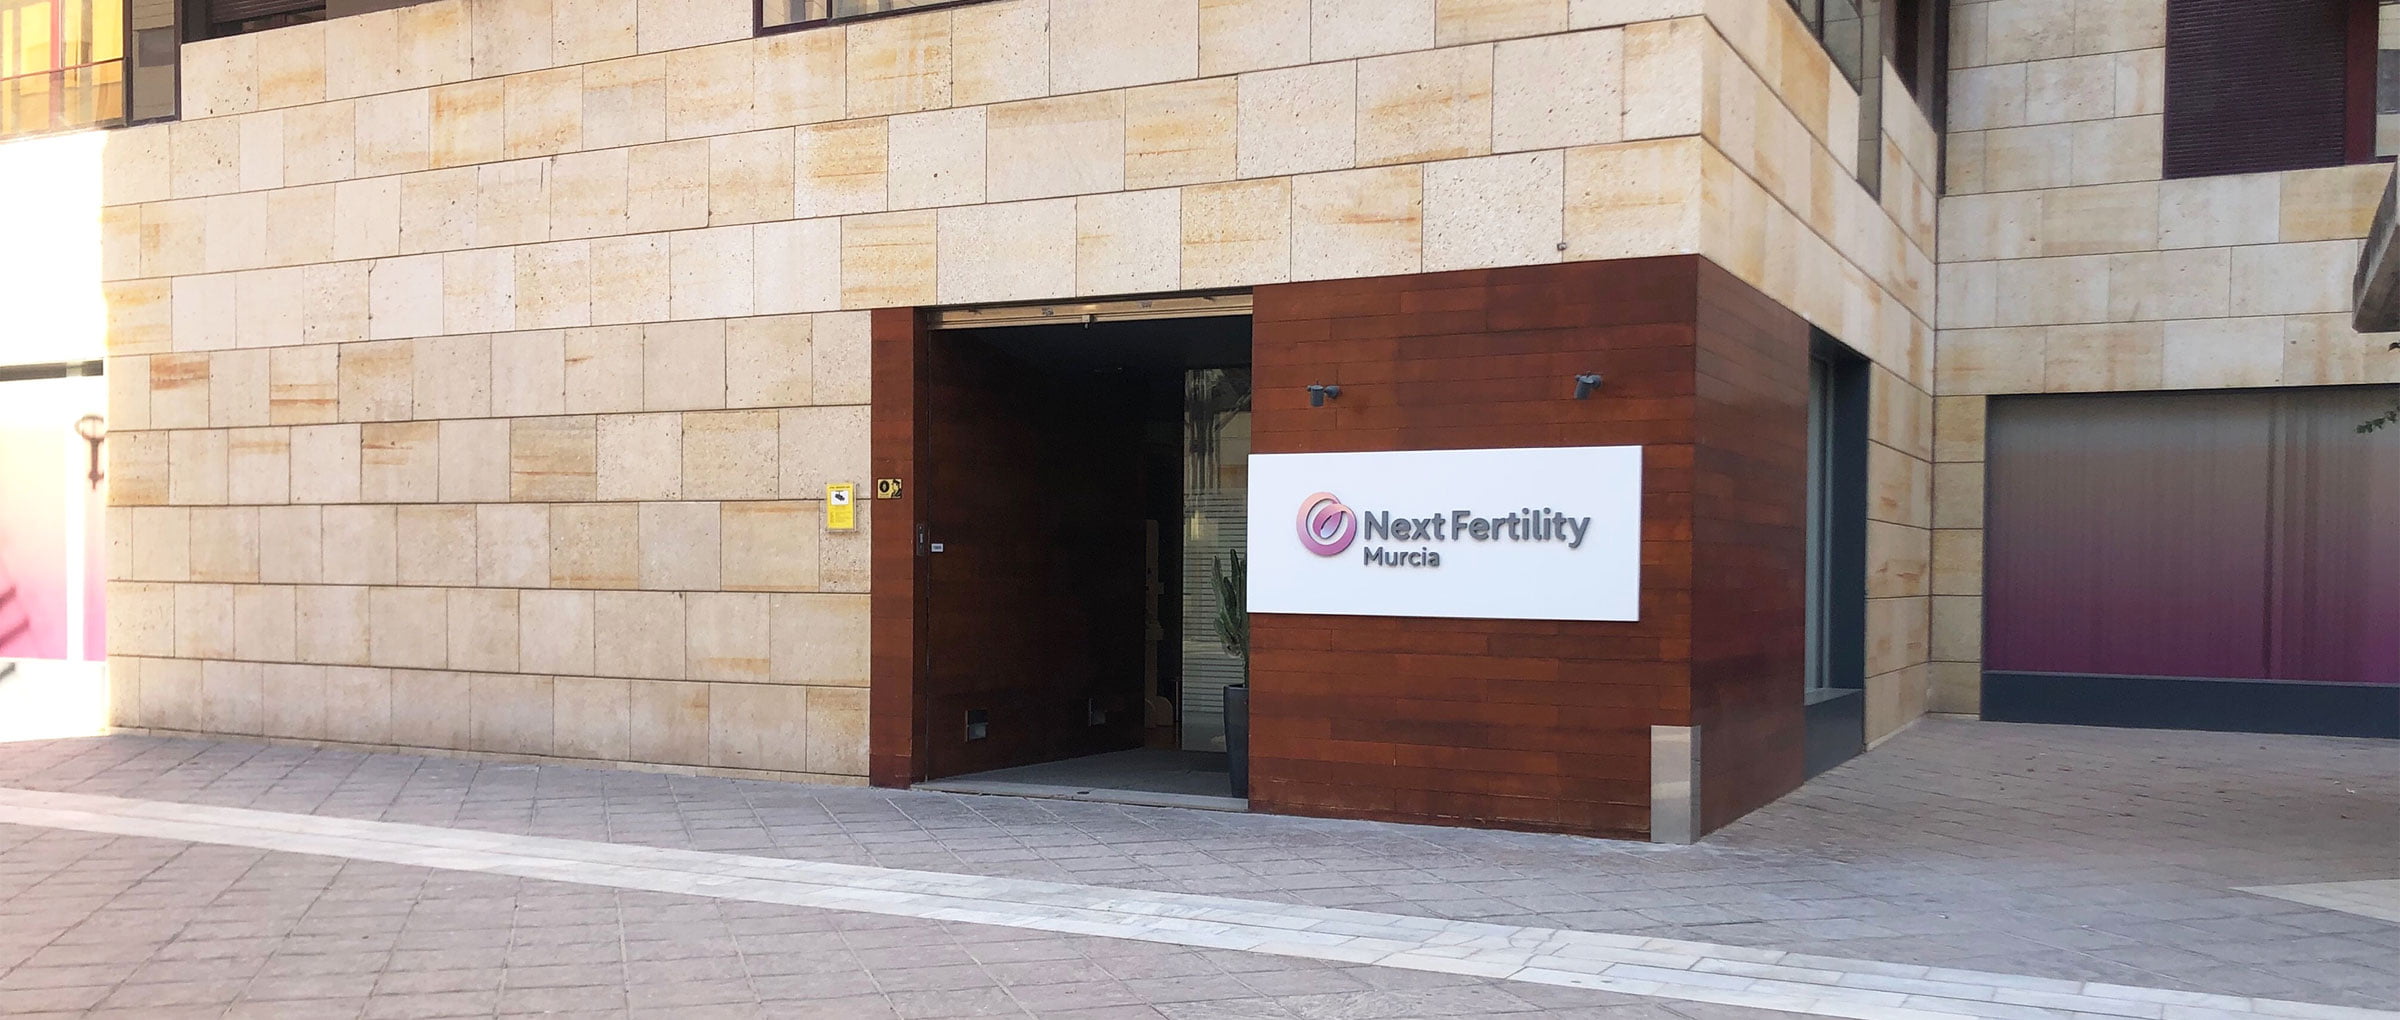 Exterior de Next Fertility Murcia